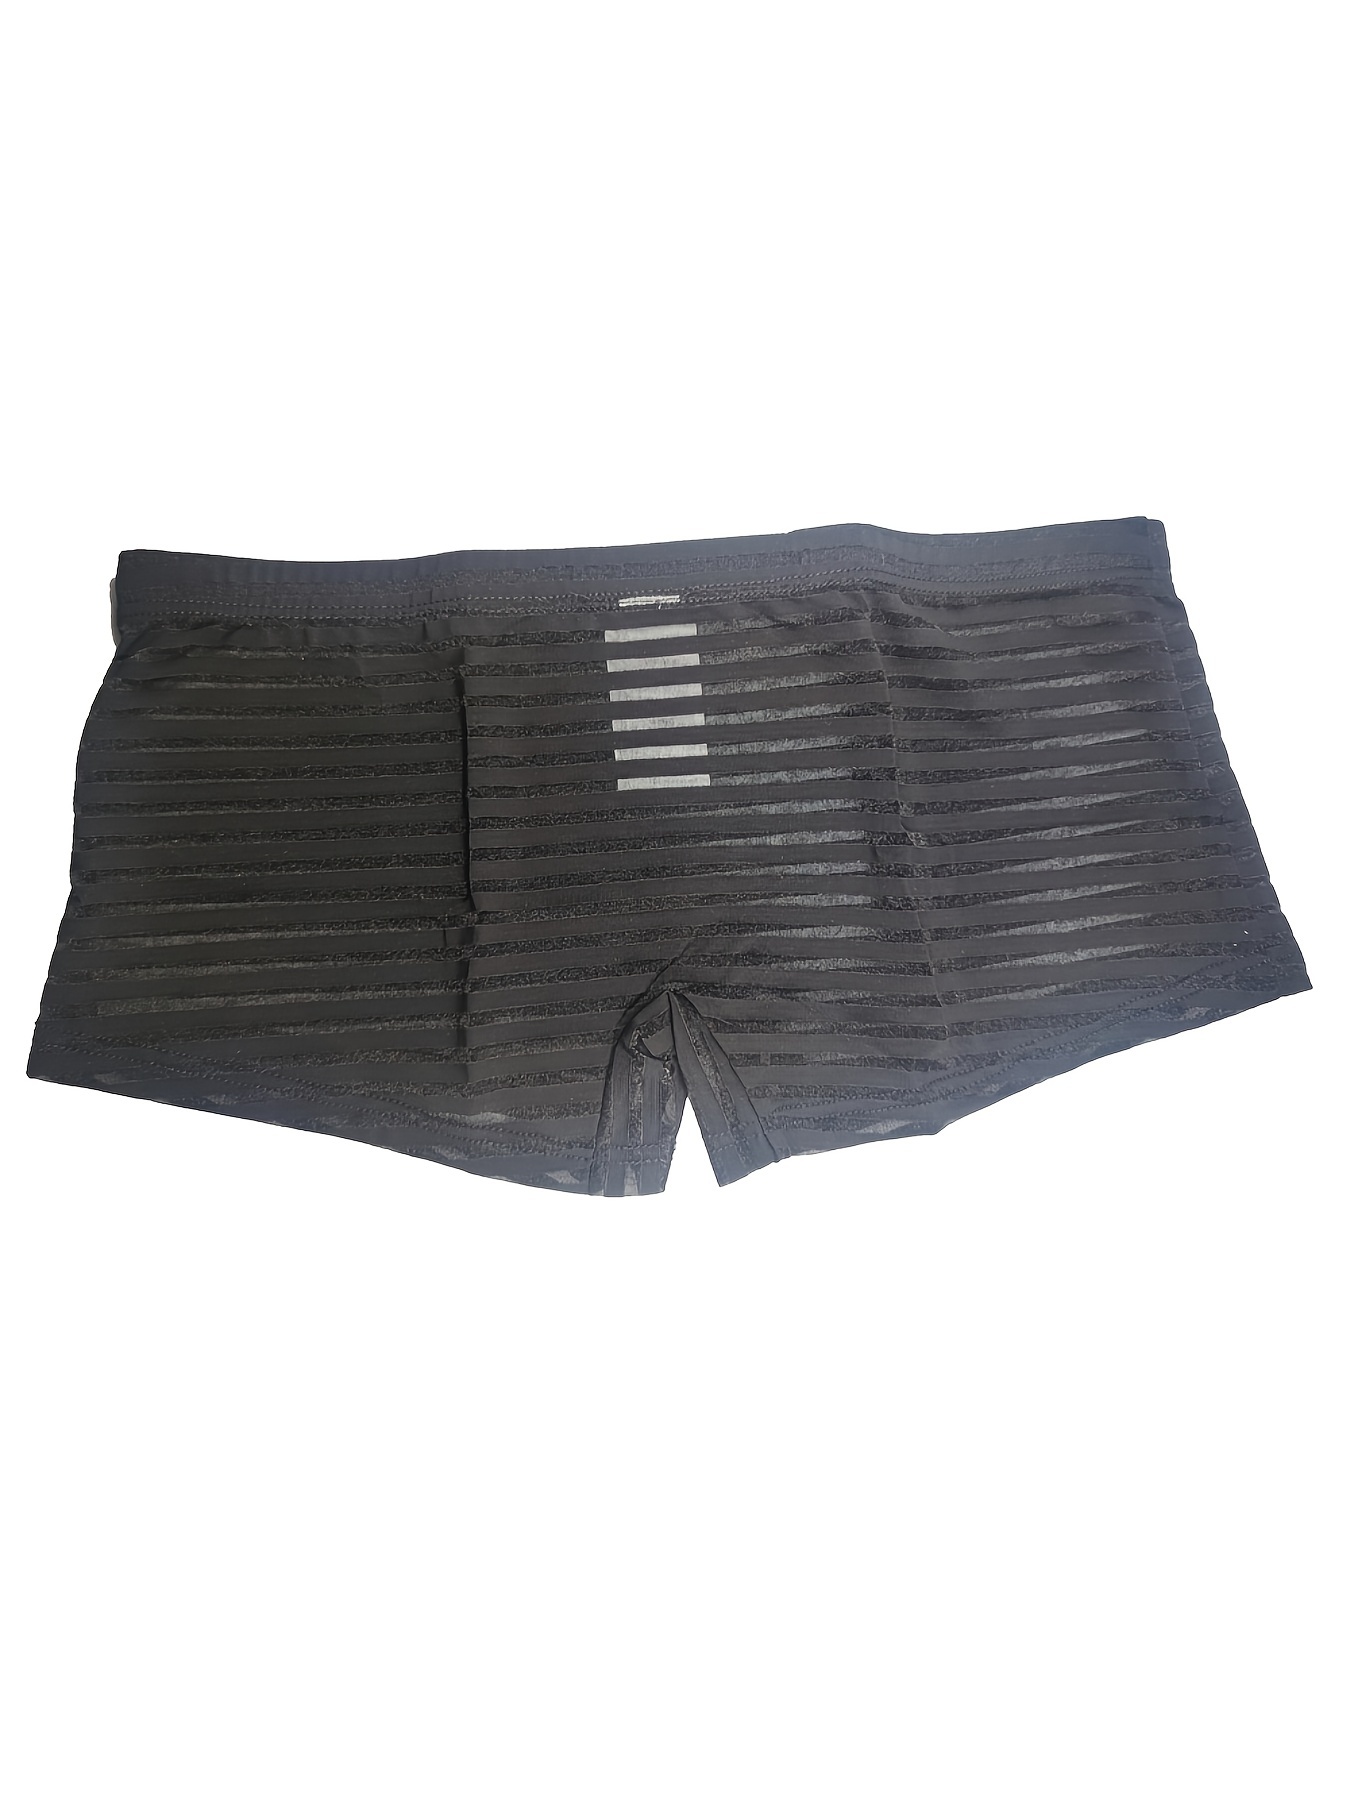 Men's see through Underwear Sexy Pouch mesh Pants transparent Boxer under #